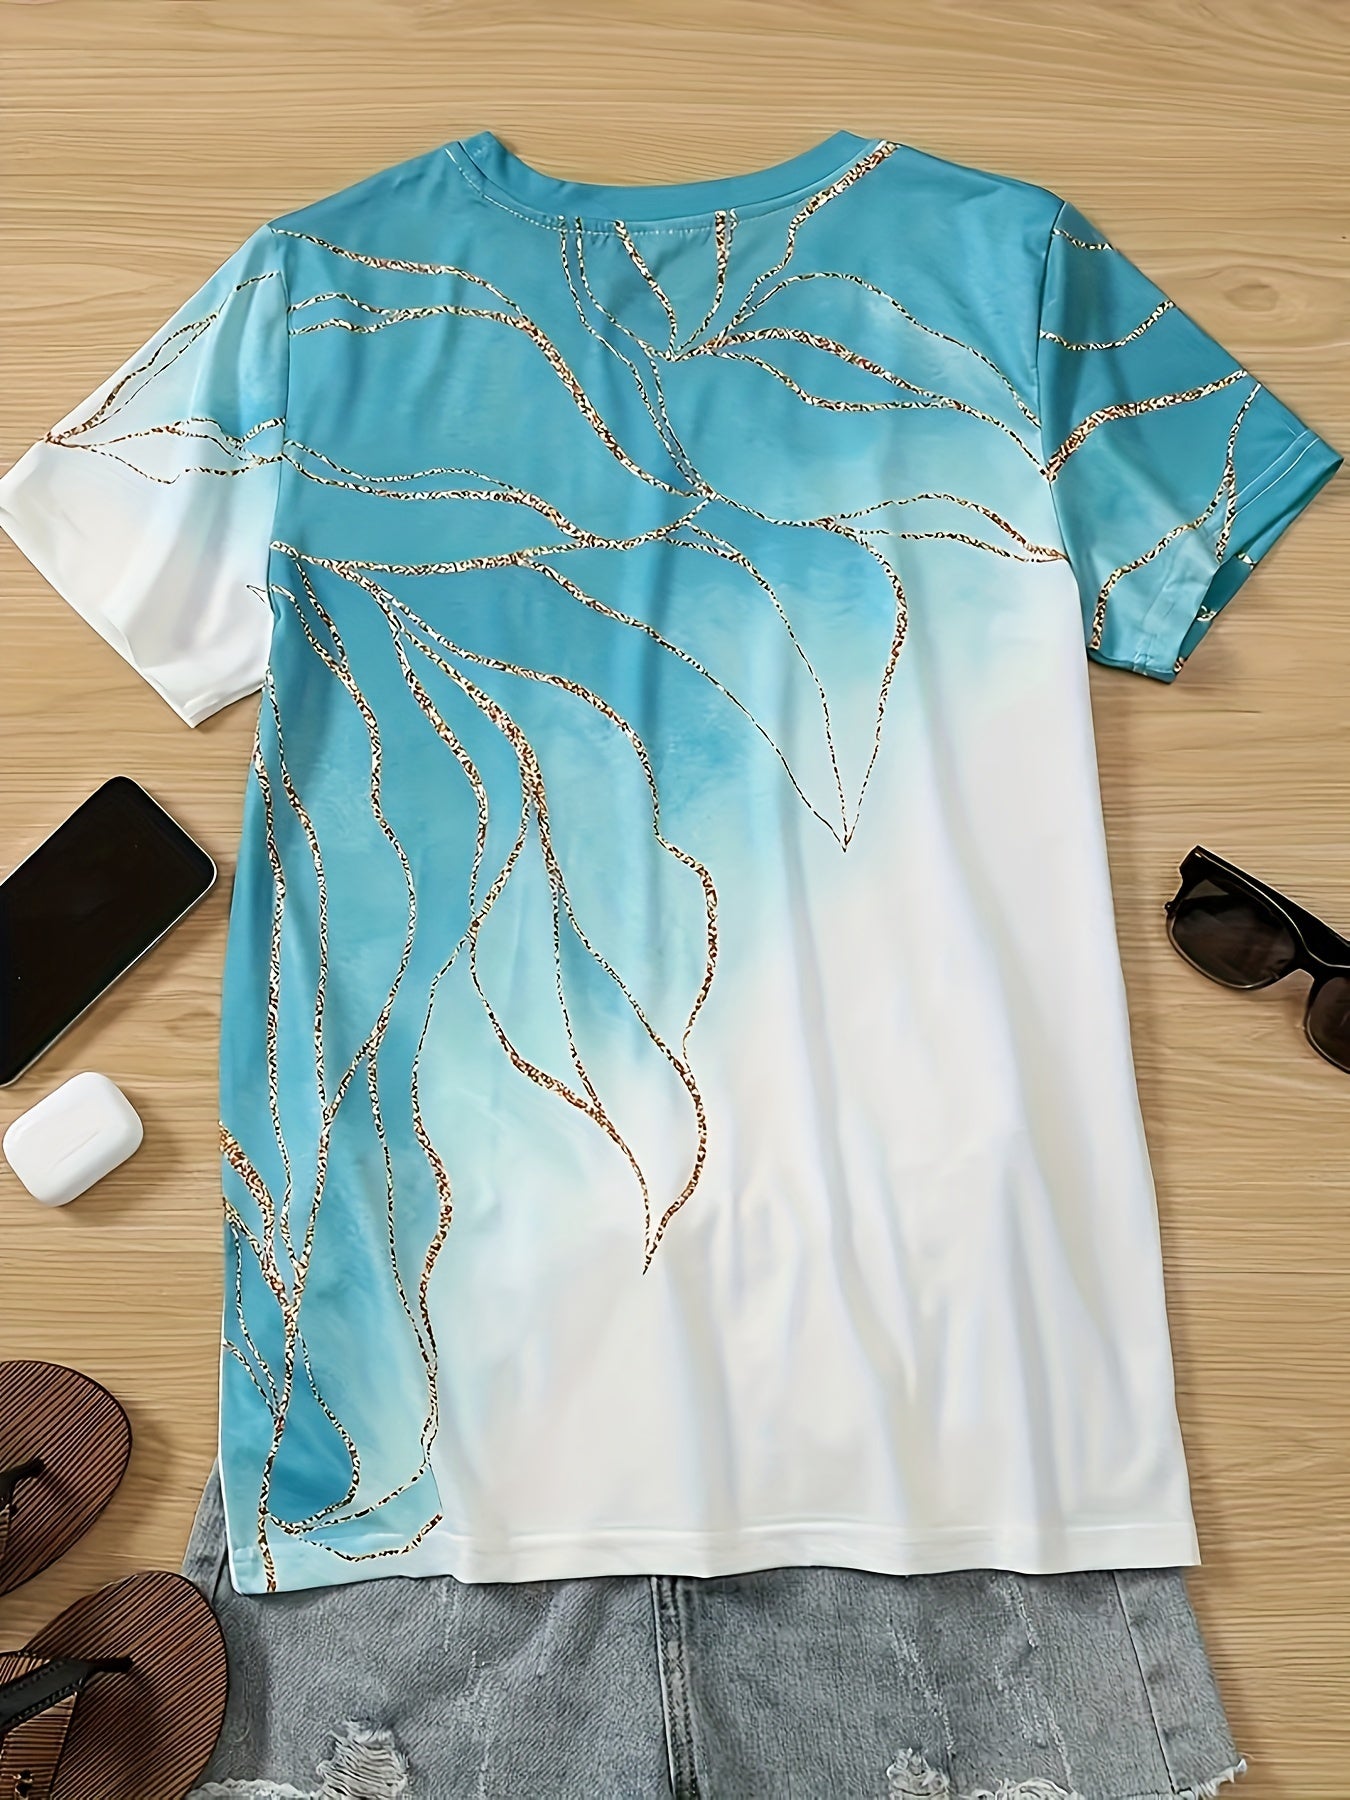 Vzyzv Marble Print Crew Neck T-Shirt, Casual Short Sleeve T-Shirt For Spring & Summer, Women's Clothing